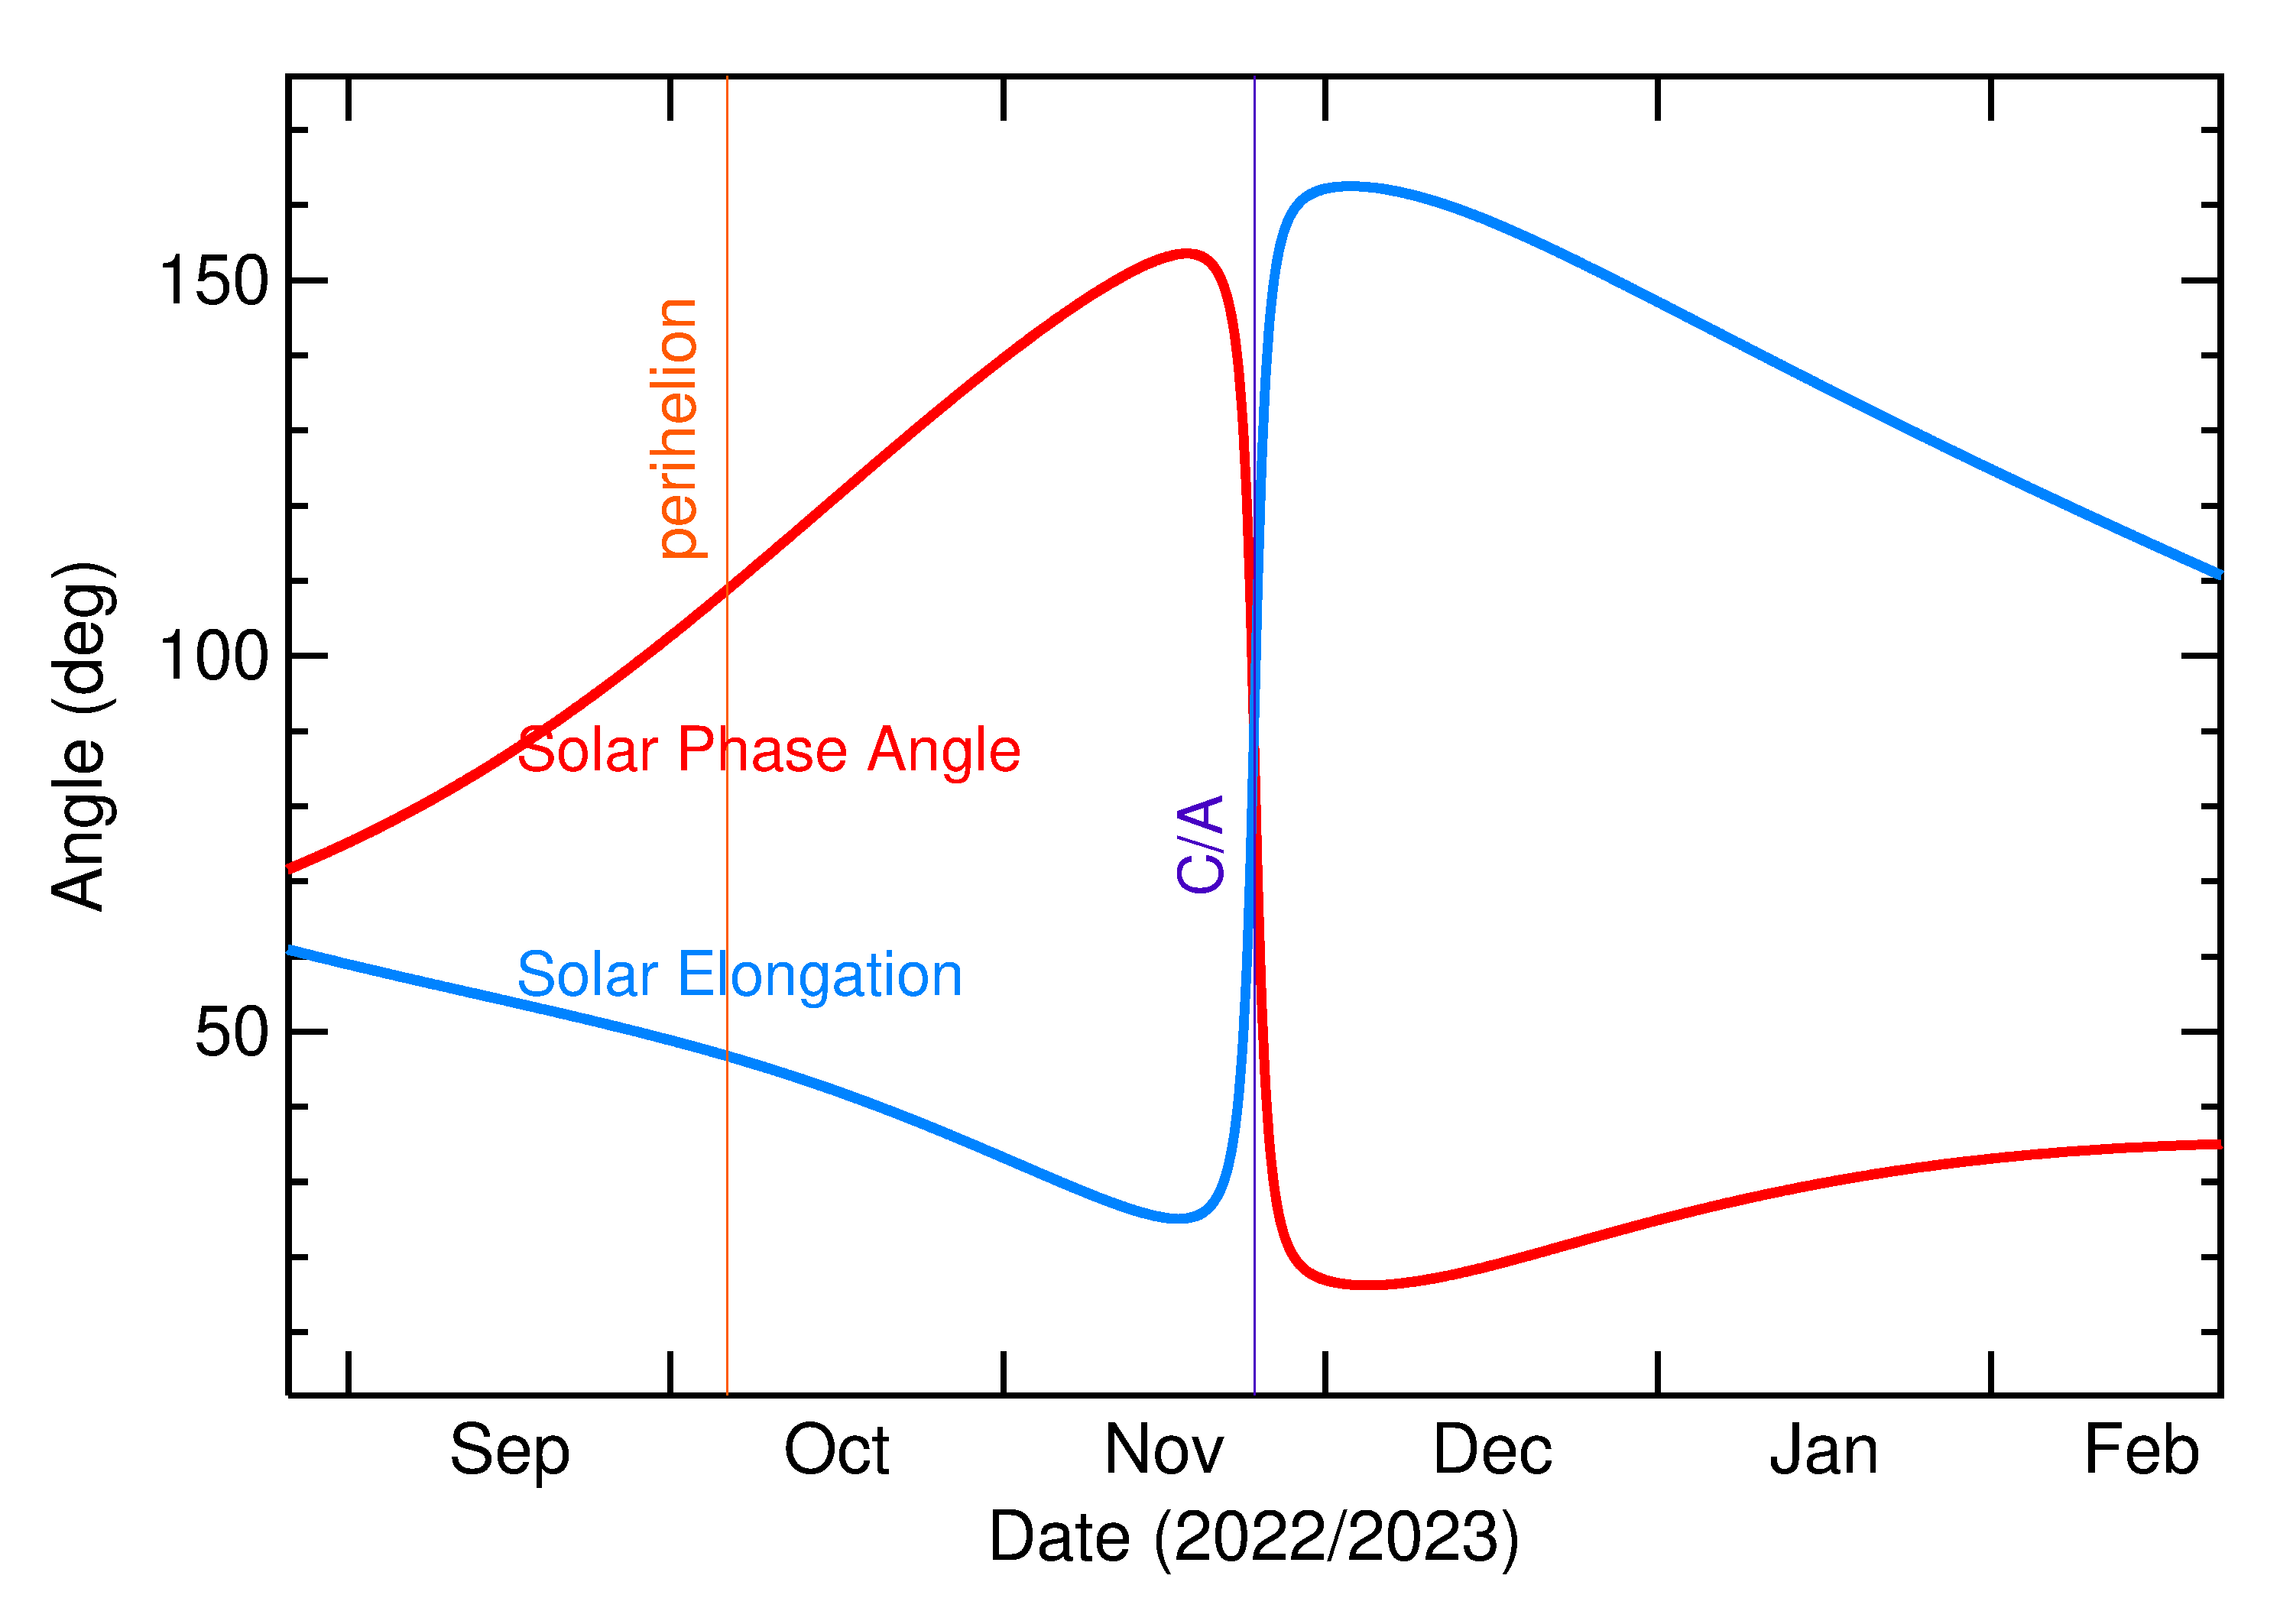 2022 Solar Elongation and Phase Angle